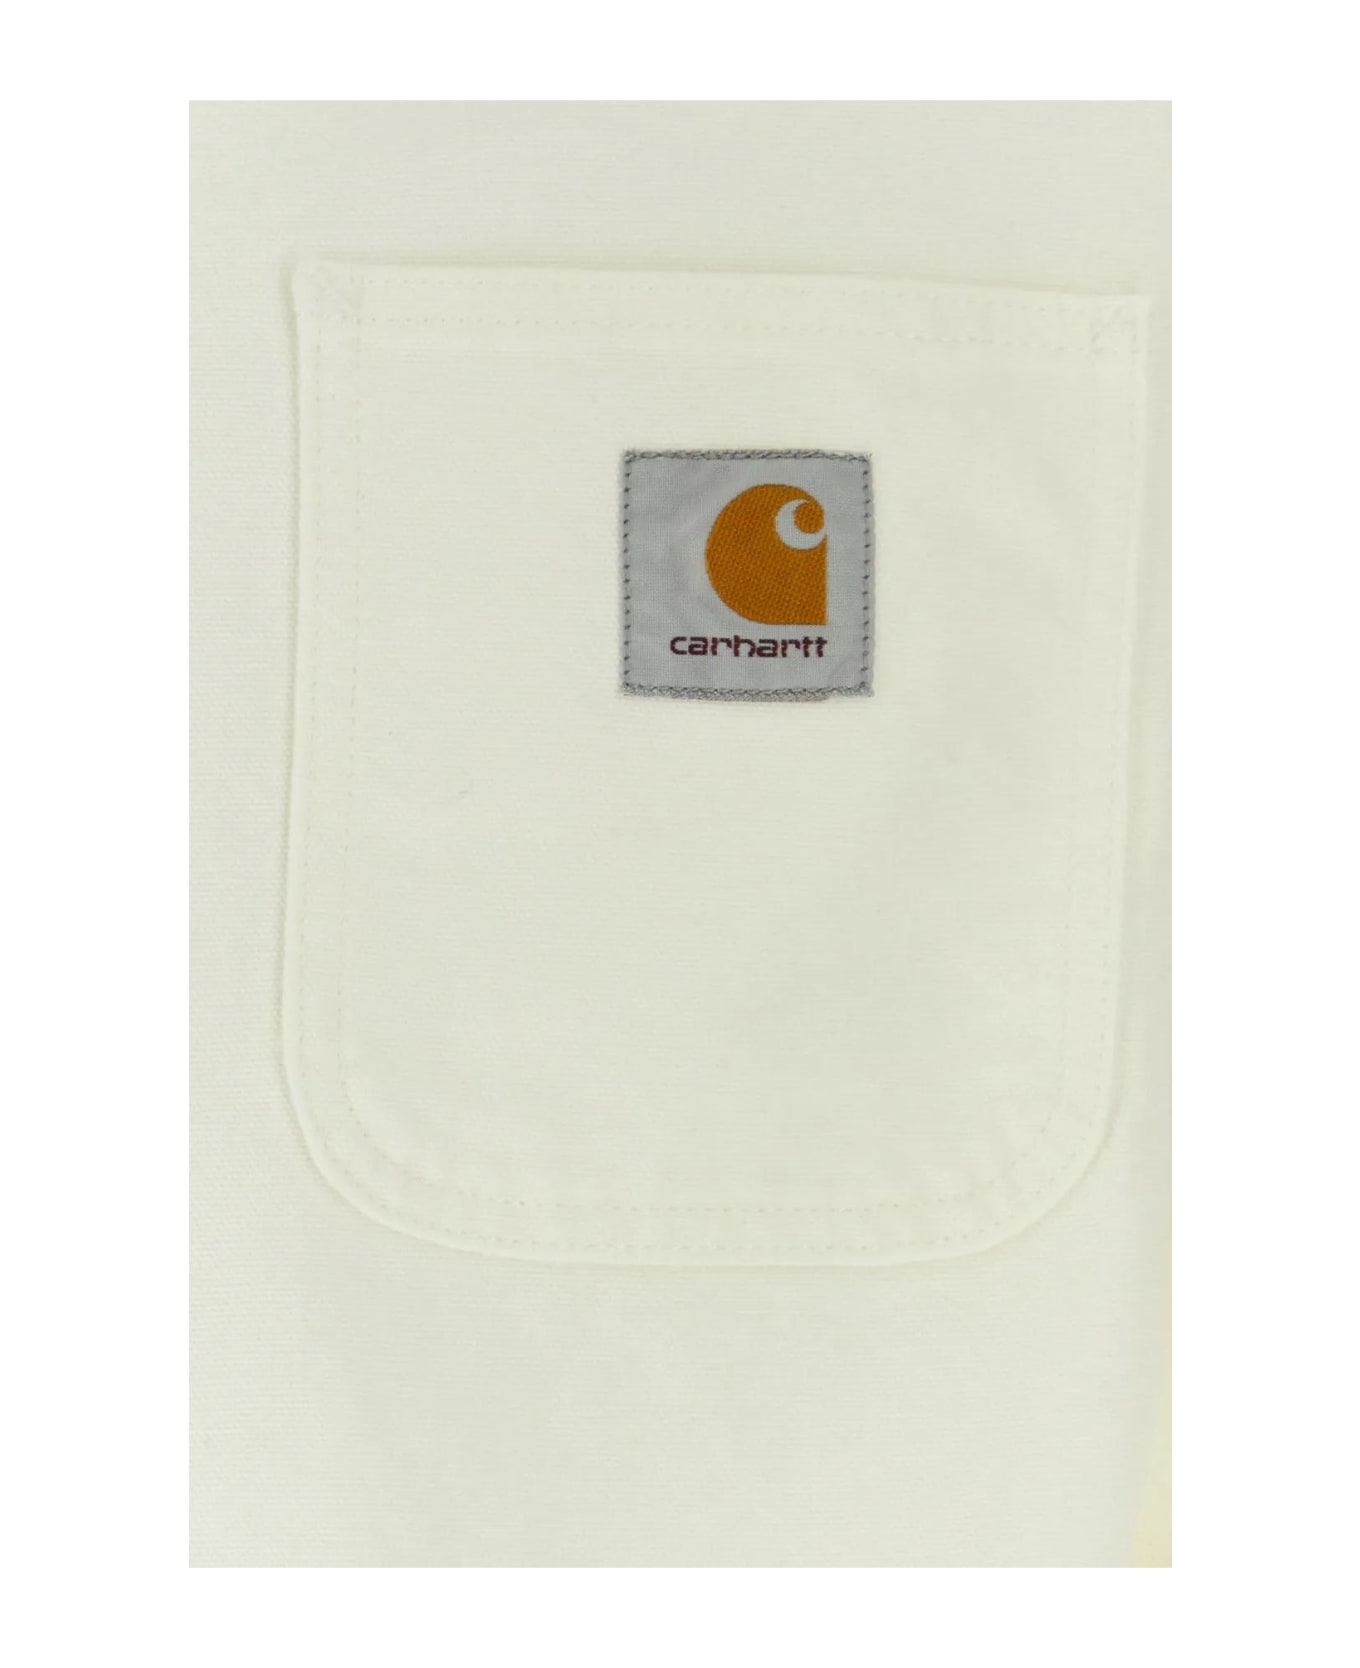 Carhartt WIP White Cotton Detroit Jacket - White ジャケット